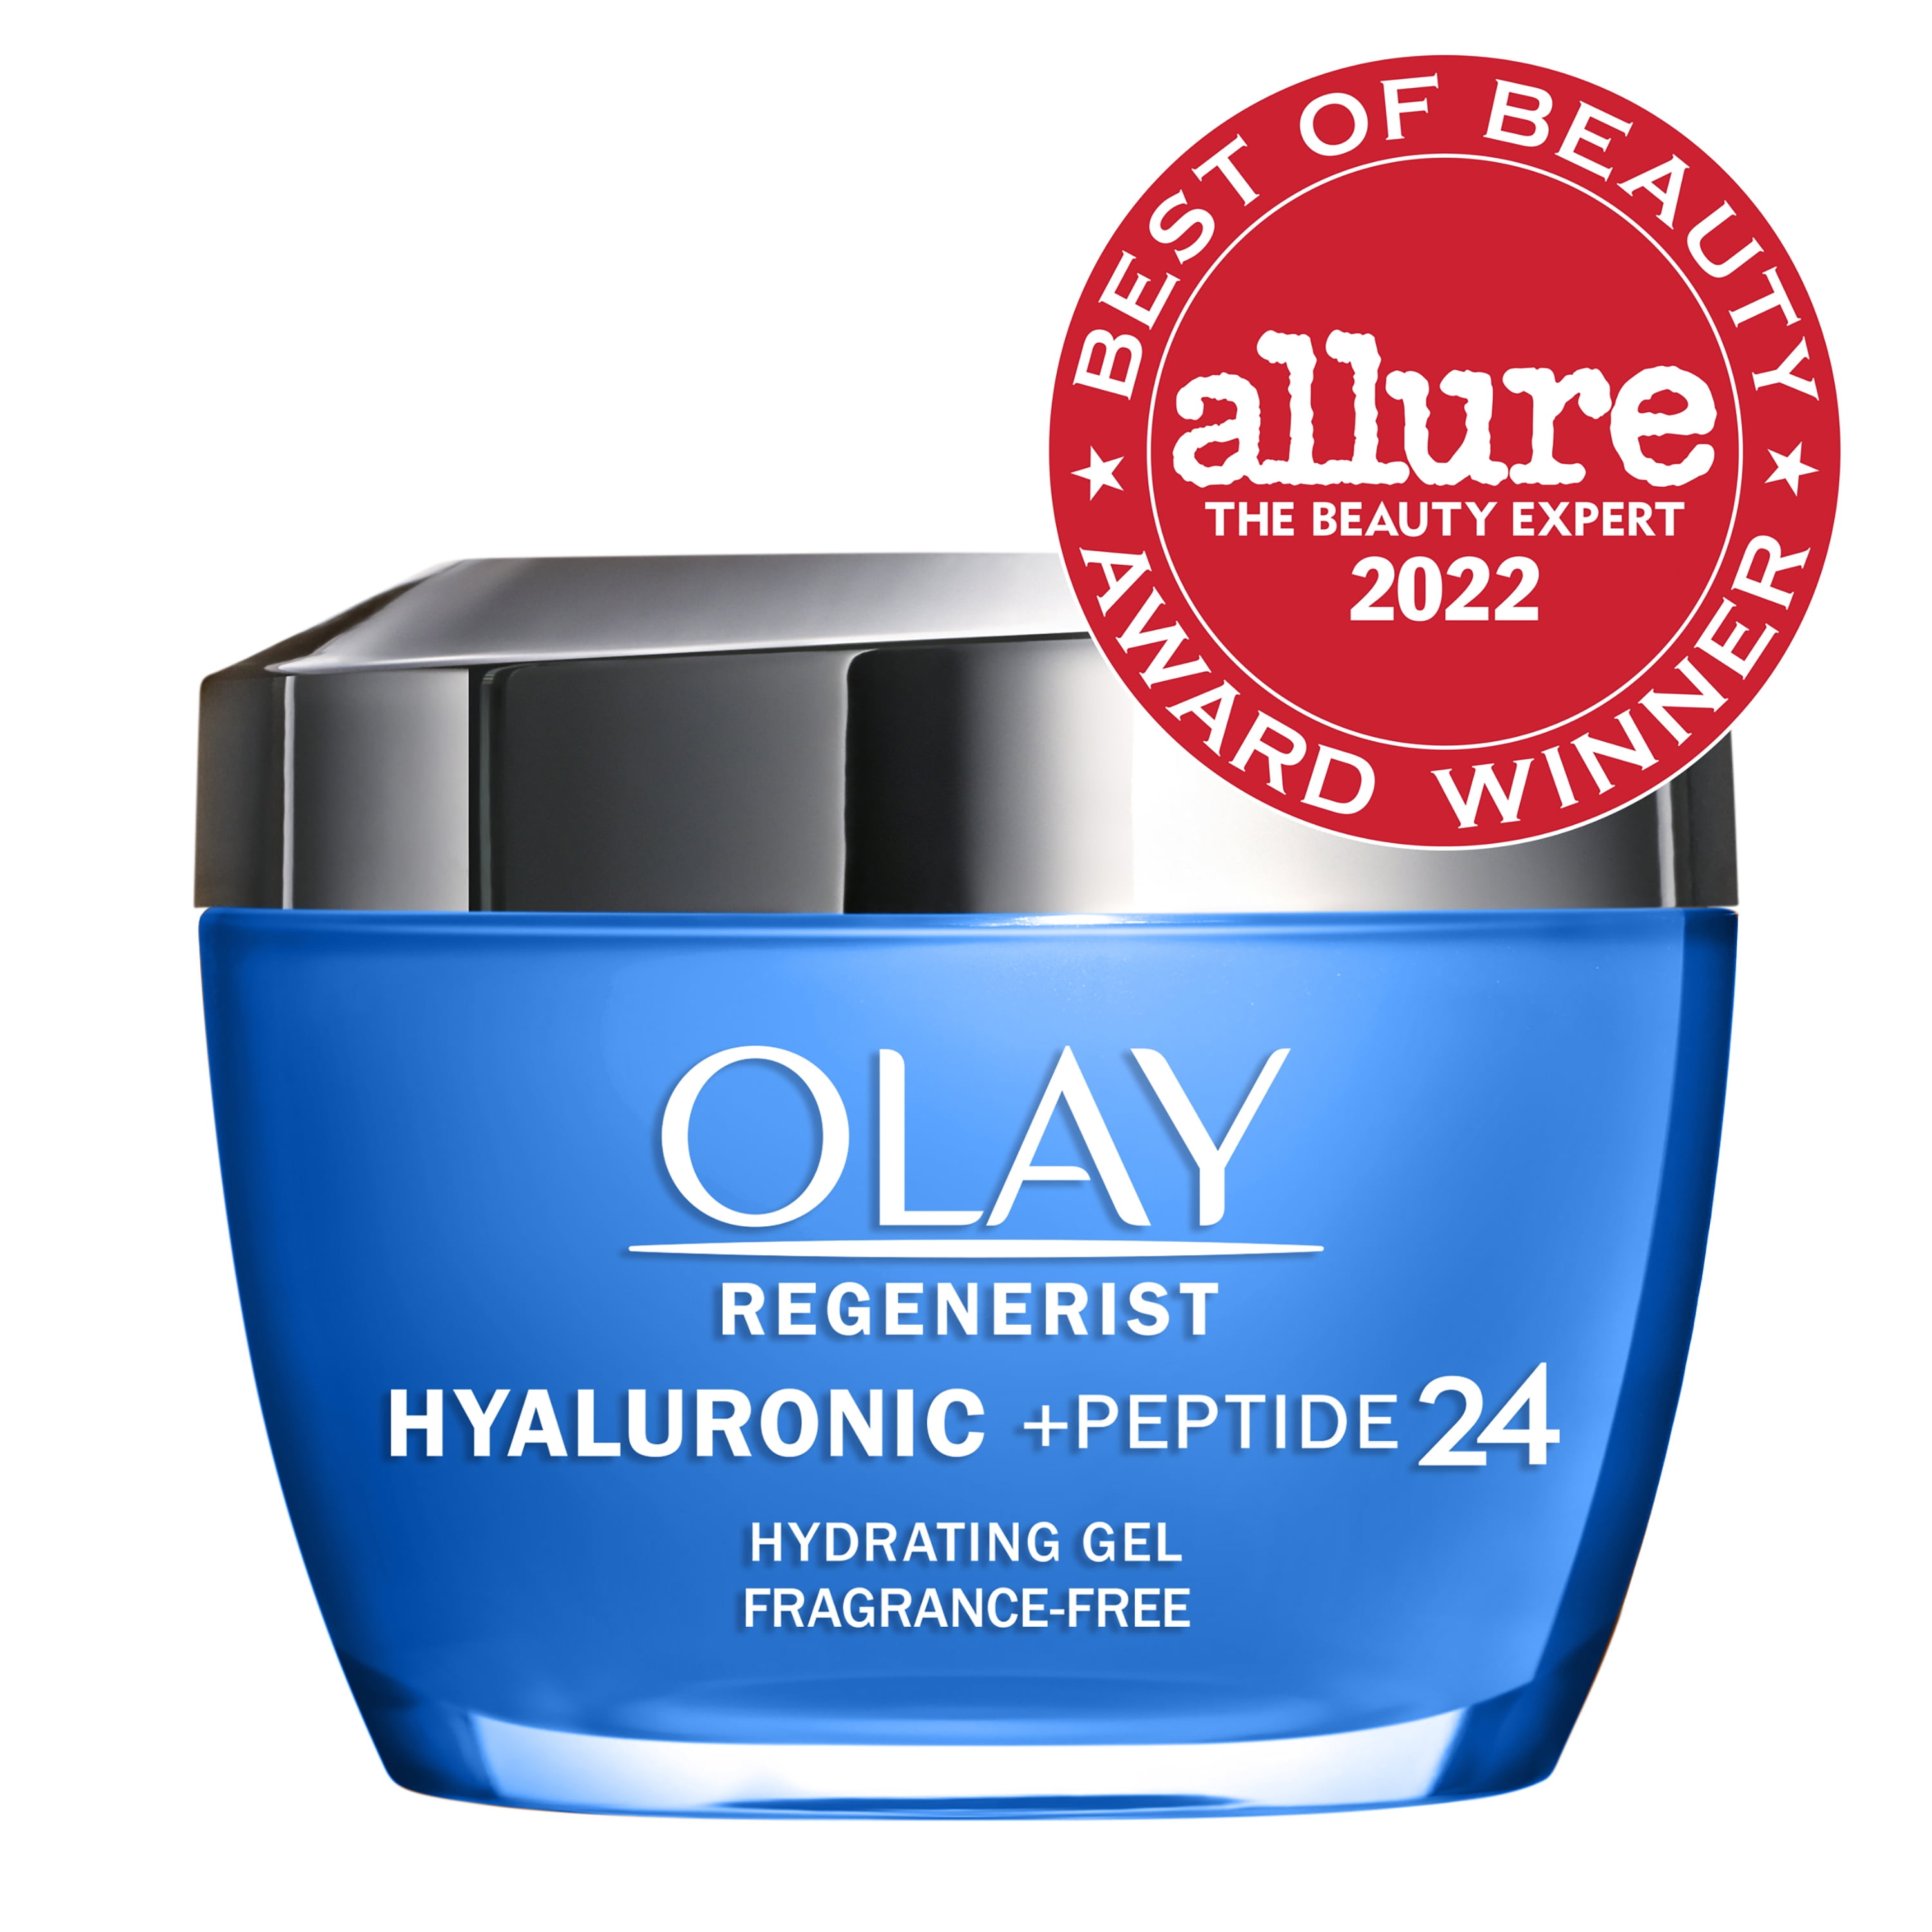 Olay Regenerist Hyaluronic Acid + Peptide 24 Gel Face Moisturizer, 1.7 oz